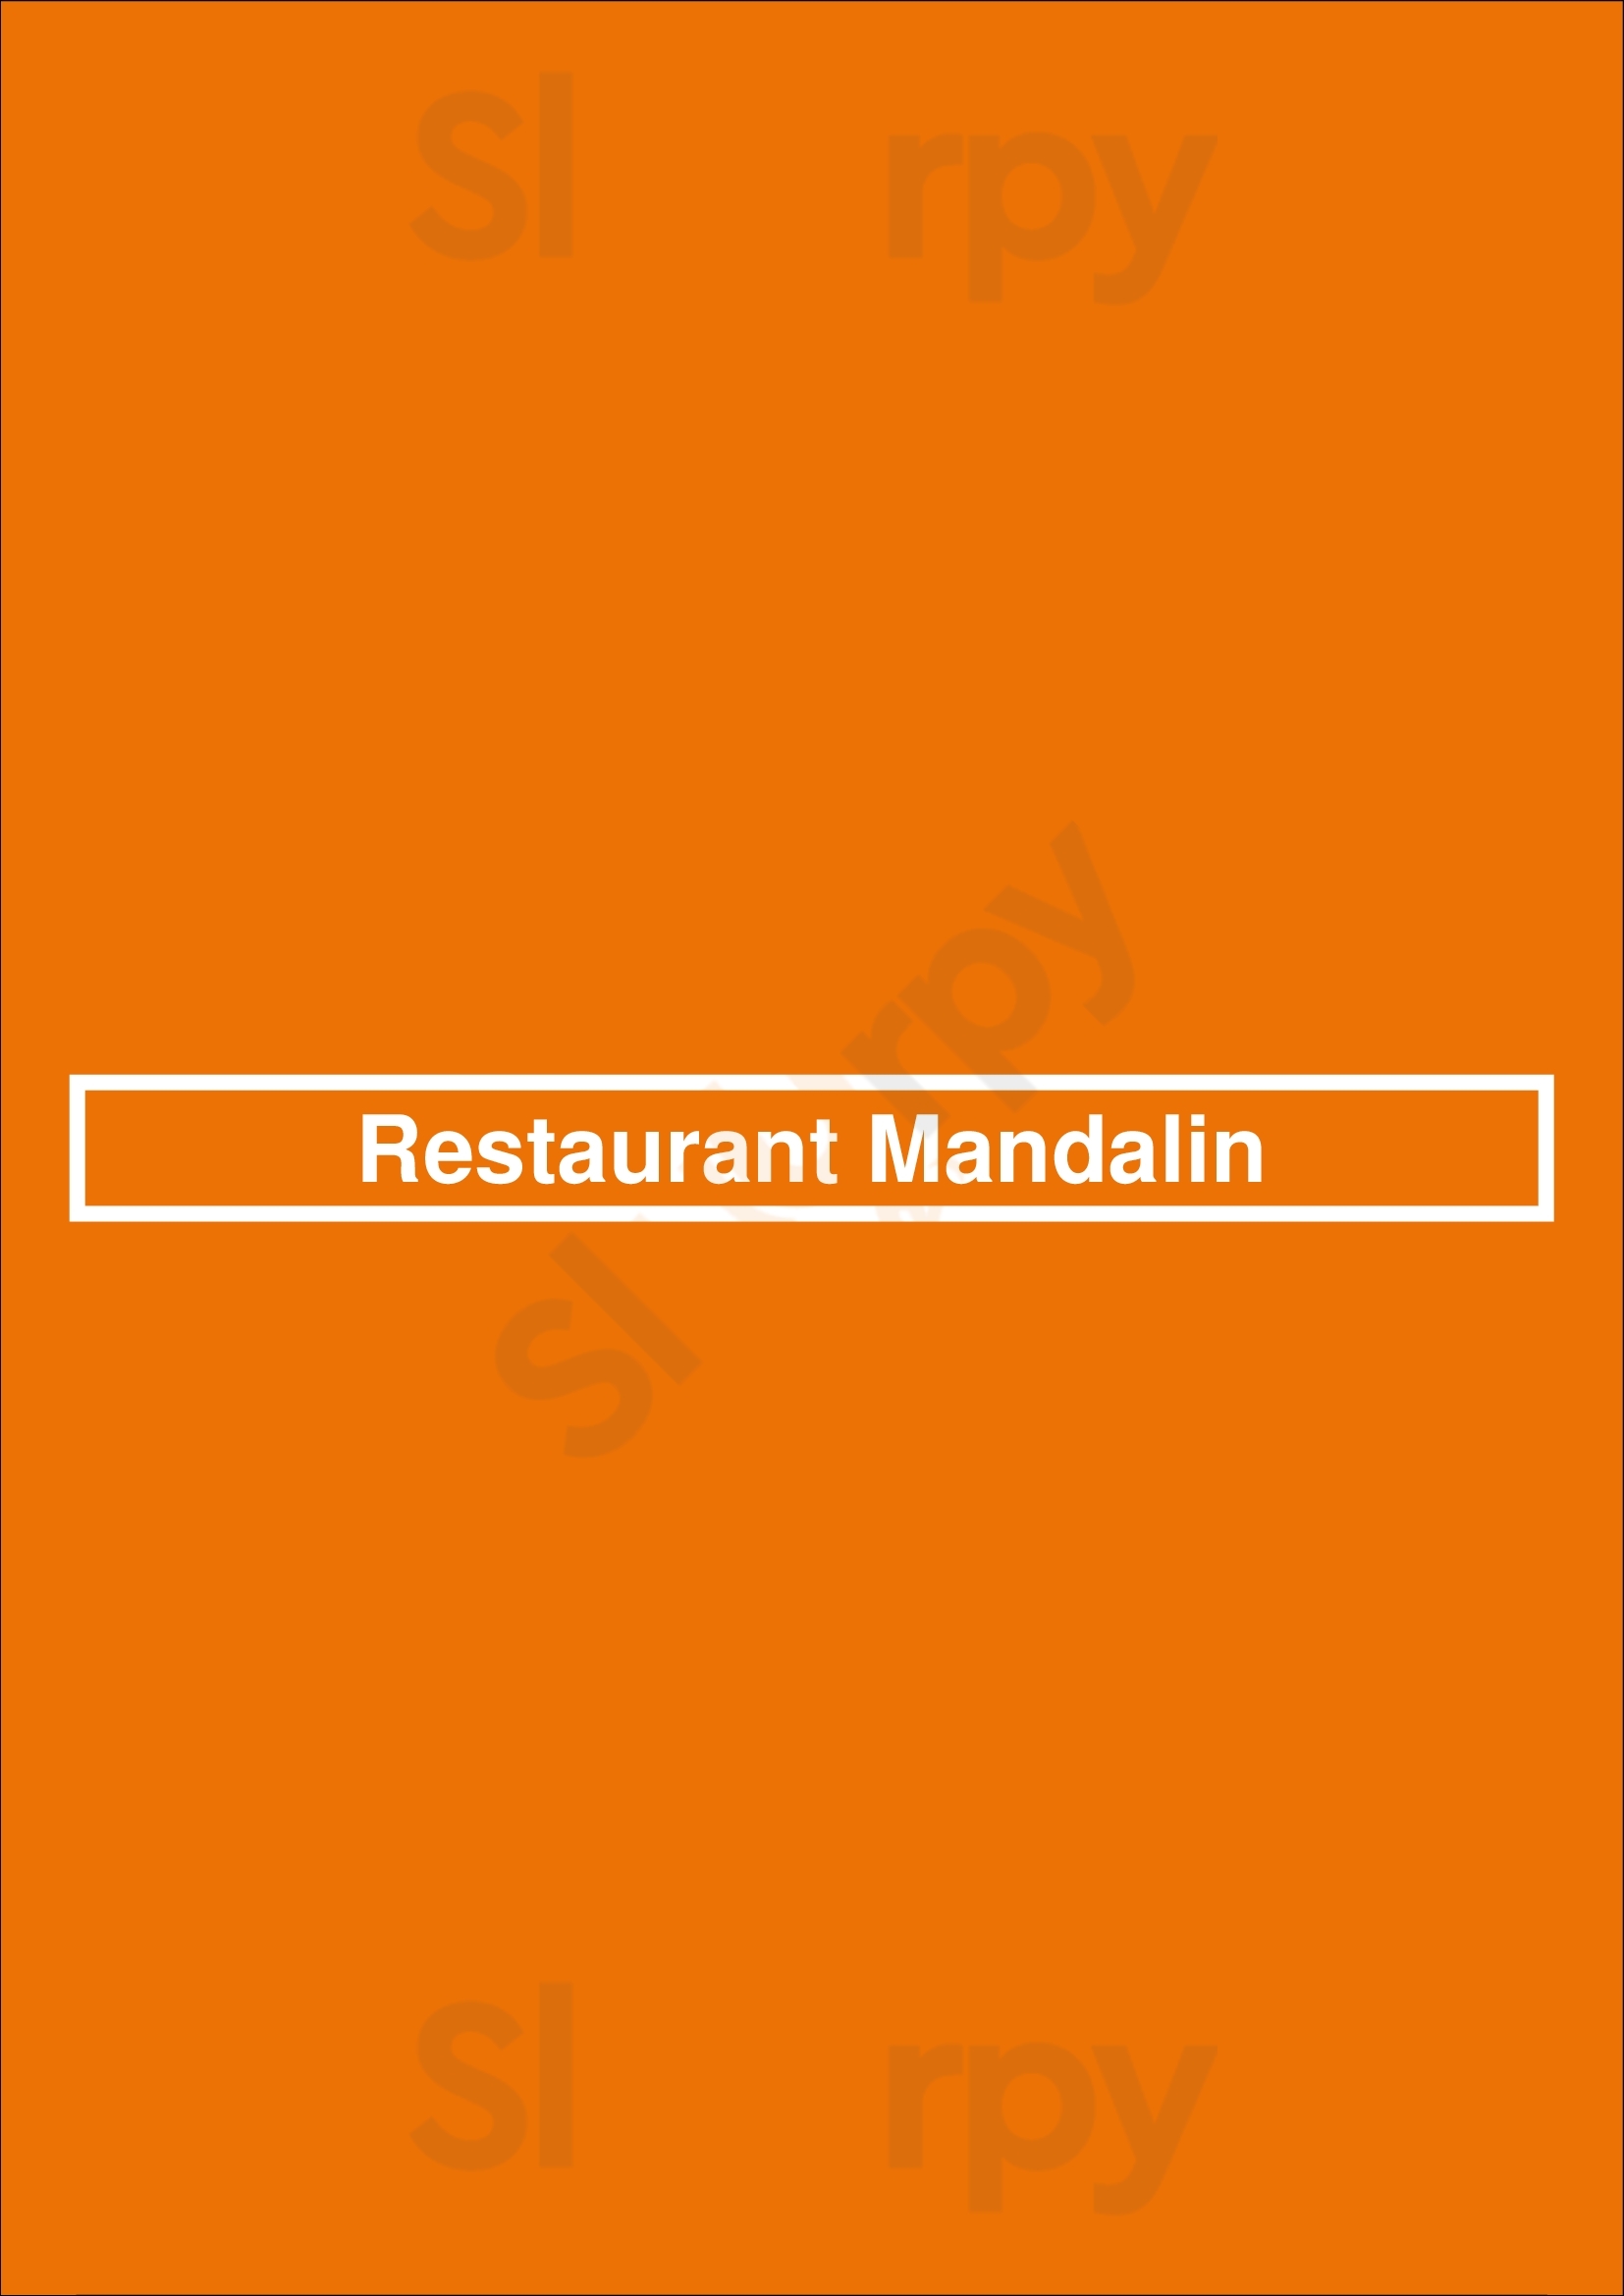 Restaurant Mandalin Maastricht Menu - 1